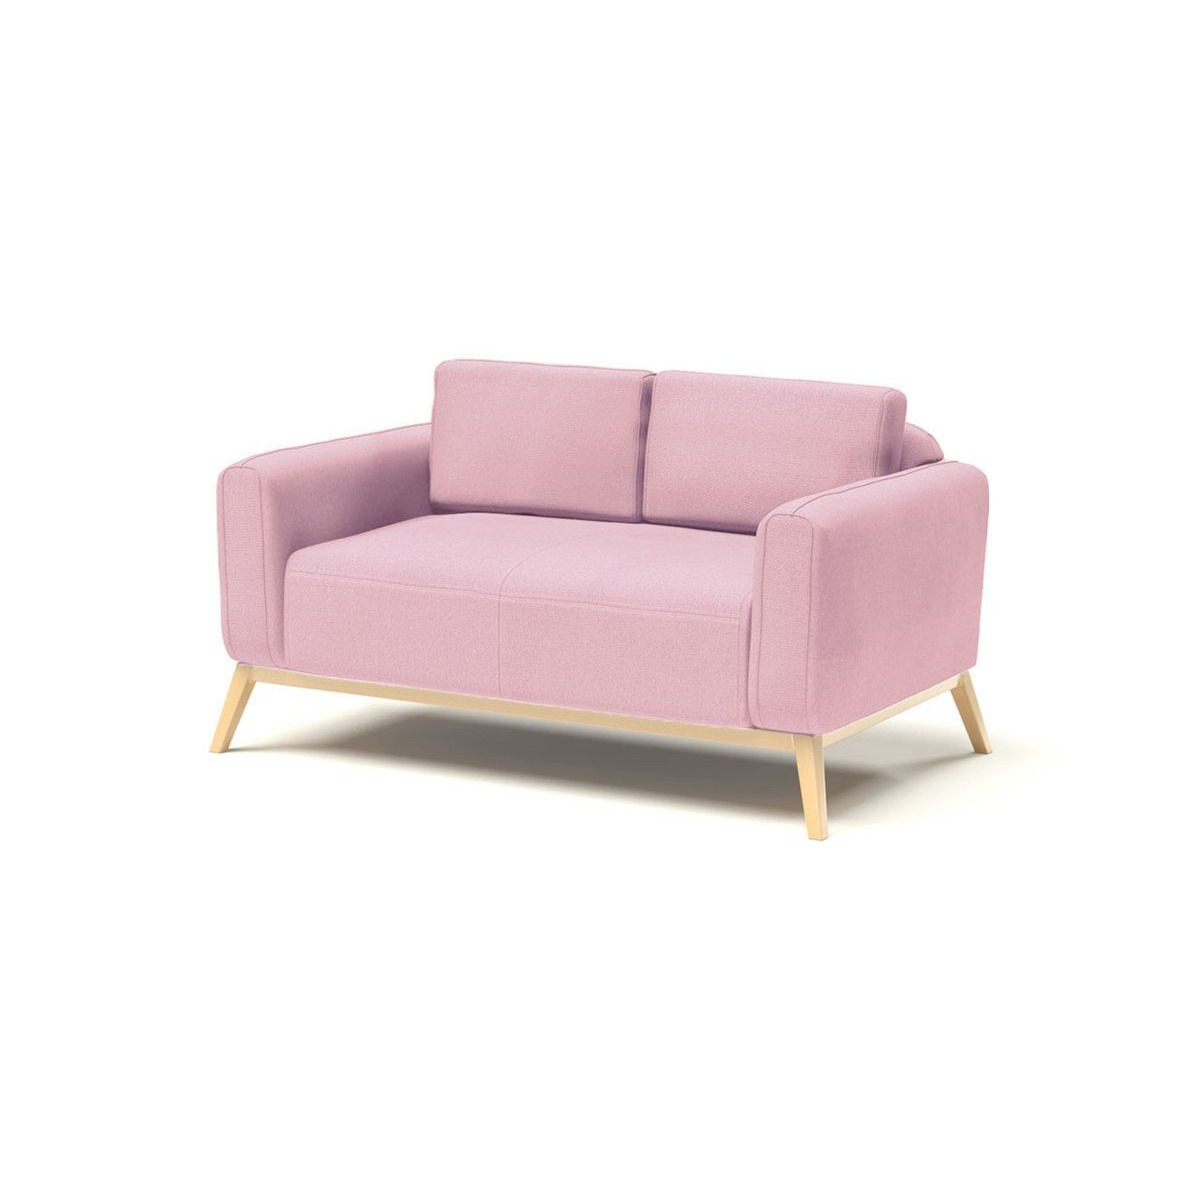 Modena 2 Seater Sofa, pink - image 1